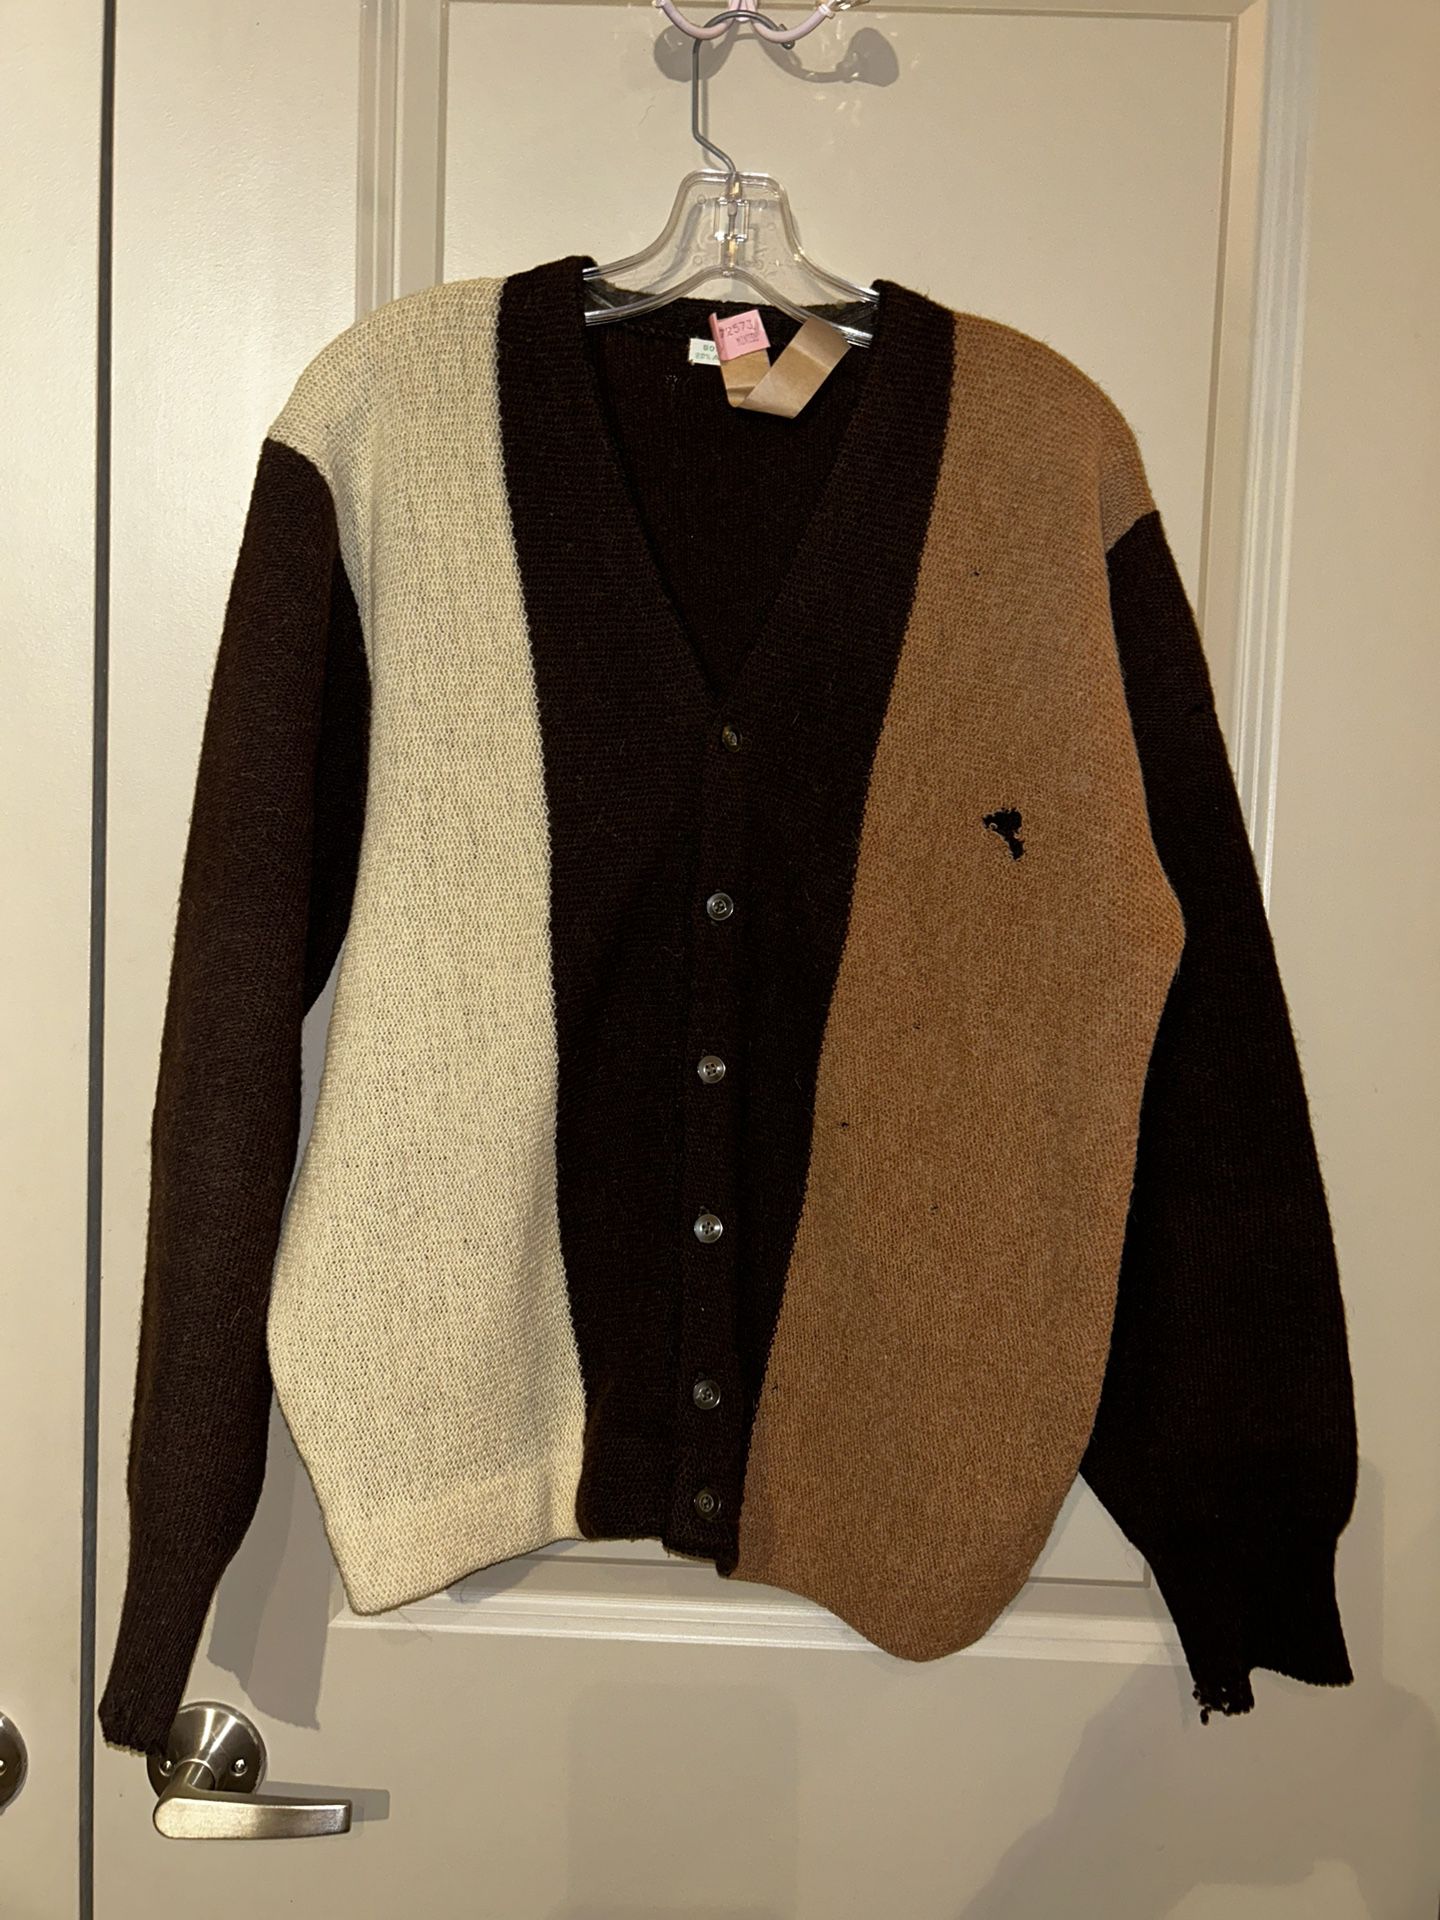 Vintage 1960s Cardigan Sweater Sz. S/M 